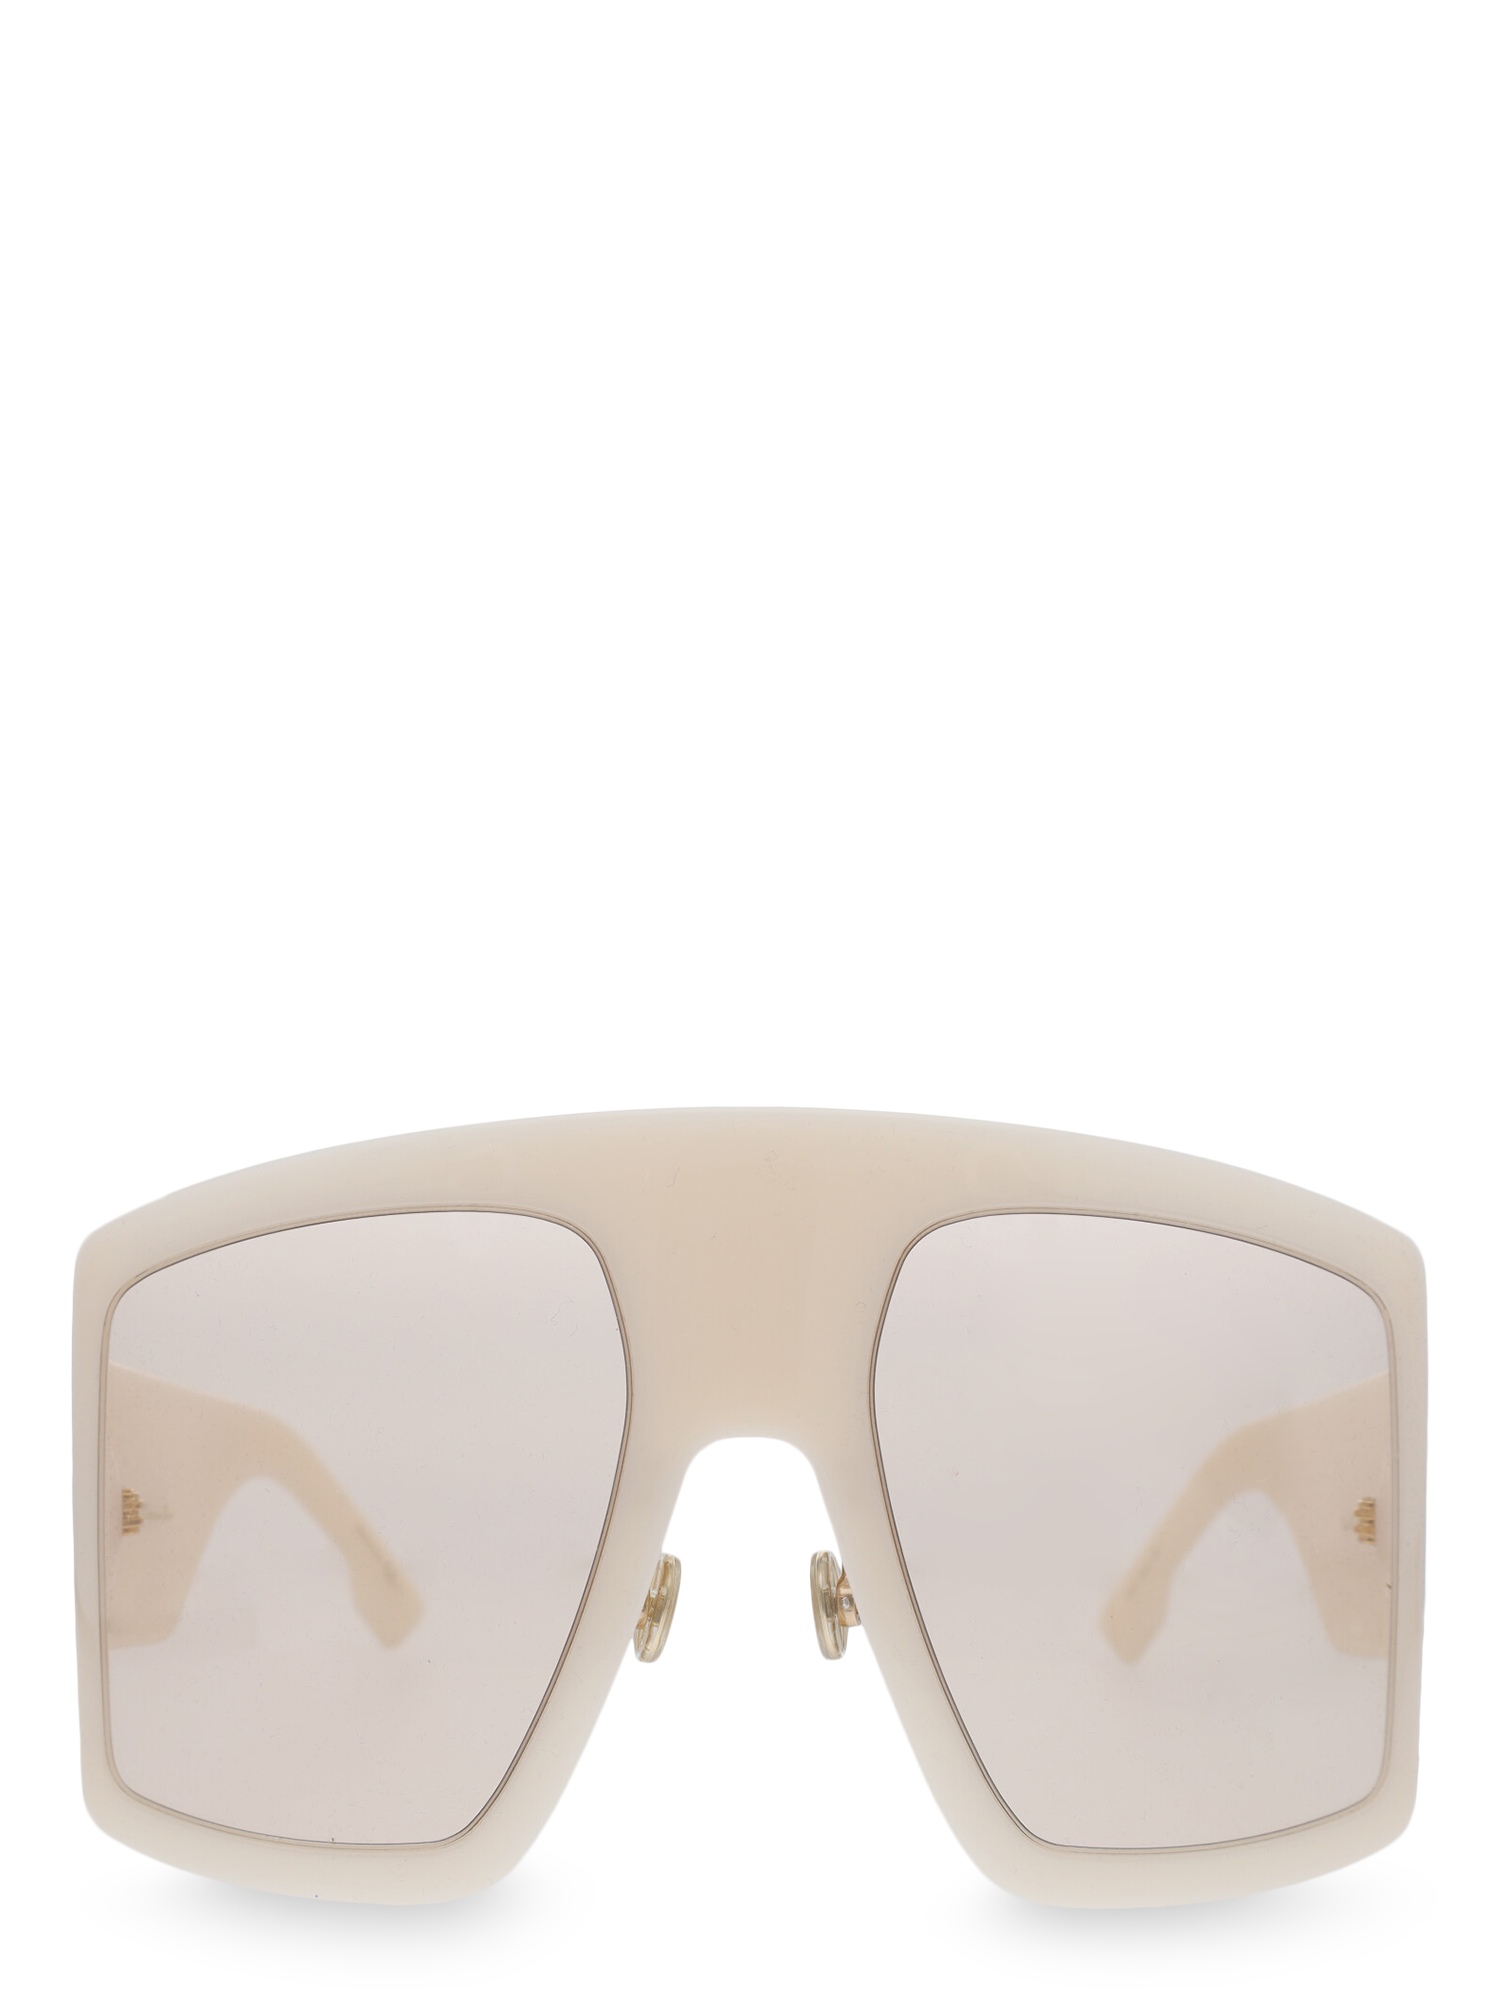 Pre-owned Dior Sunglasses In Beige